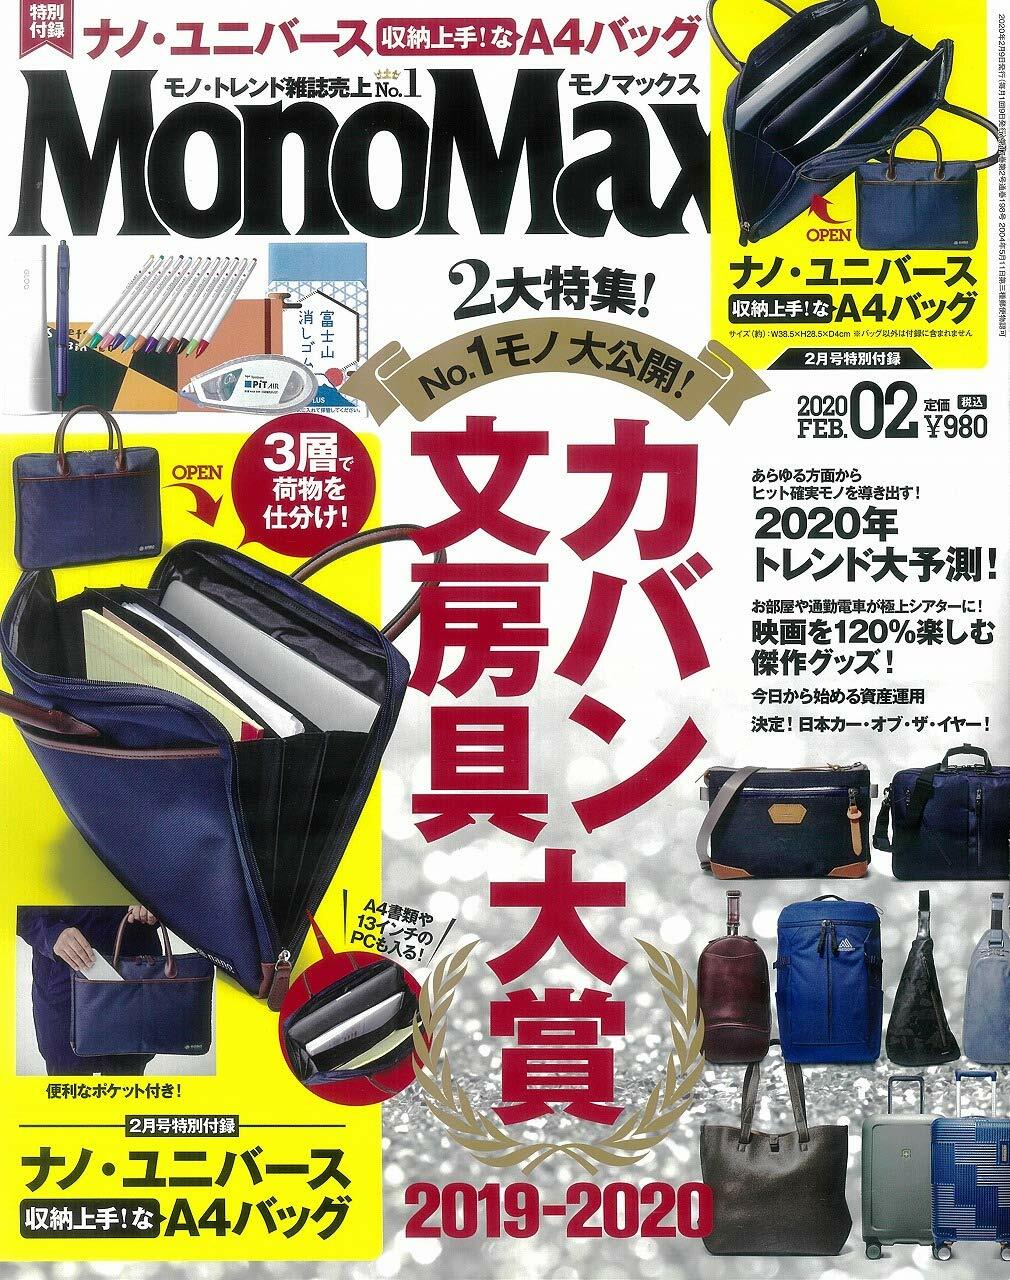 Mono Max (モノ·マックス) 2020年 02月號 [雜誌] (月刊, 雜誌)